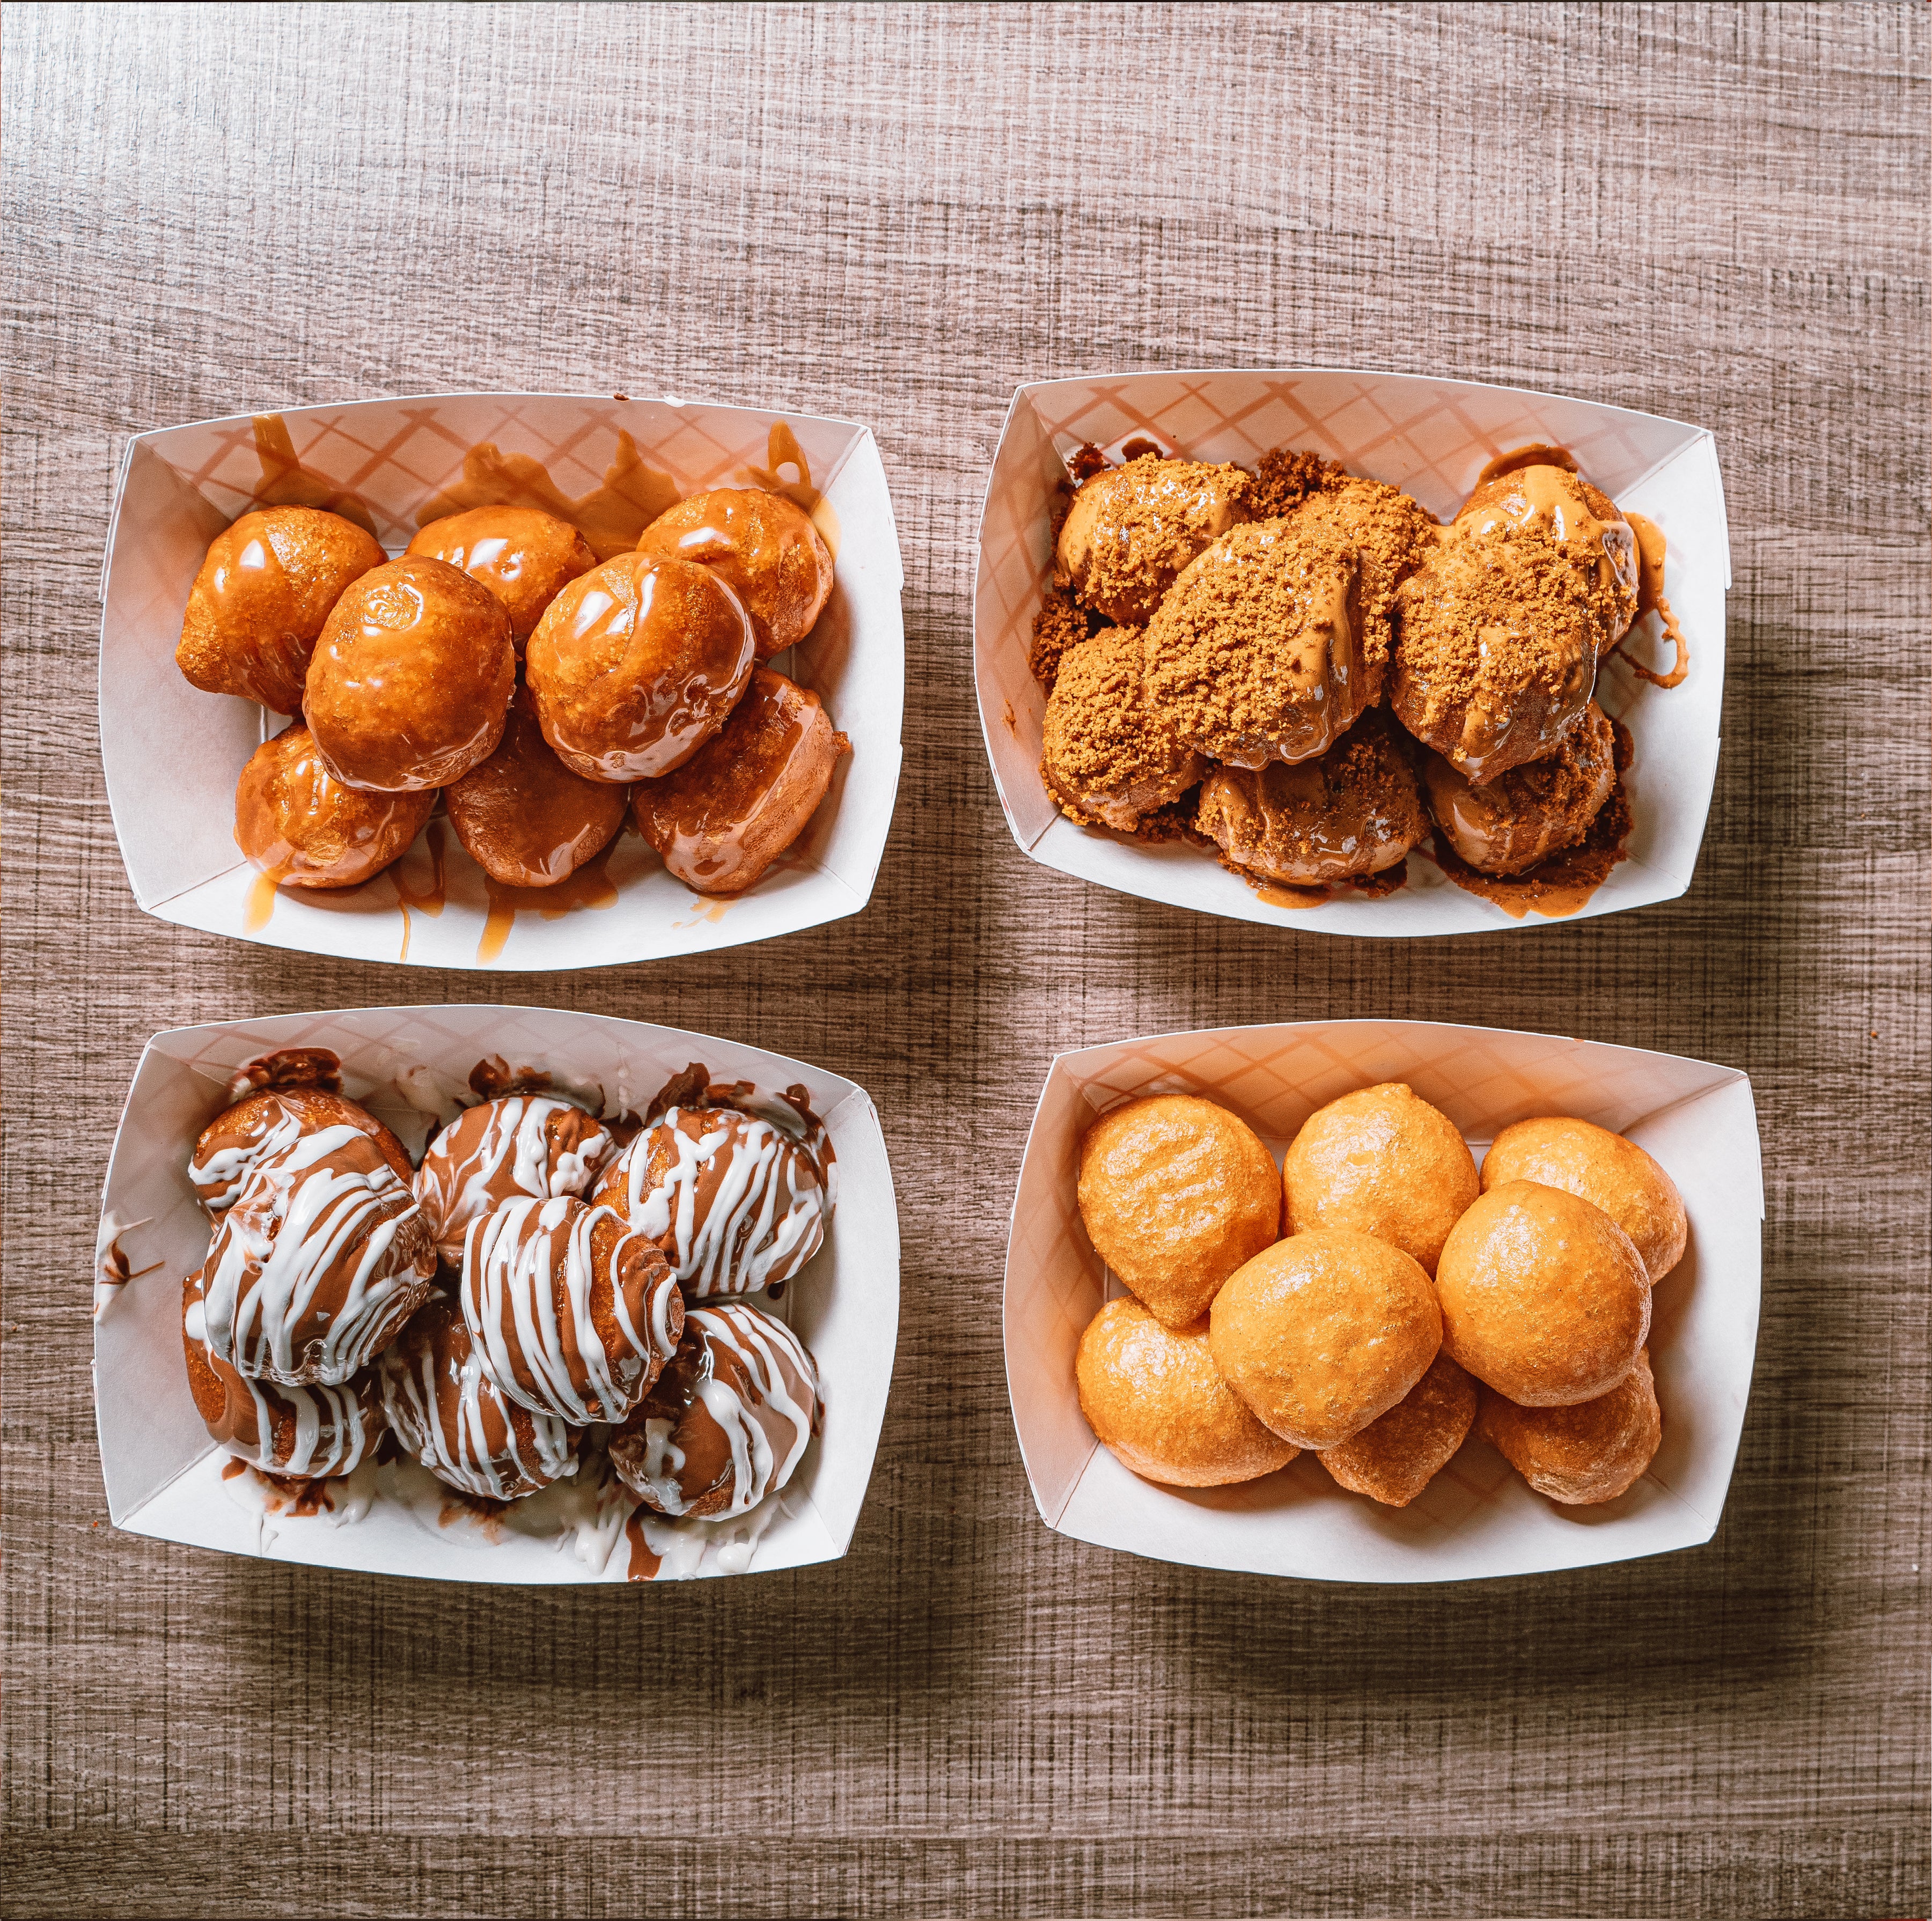 Load video: Doughbits dessert house